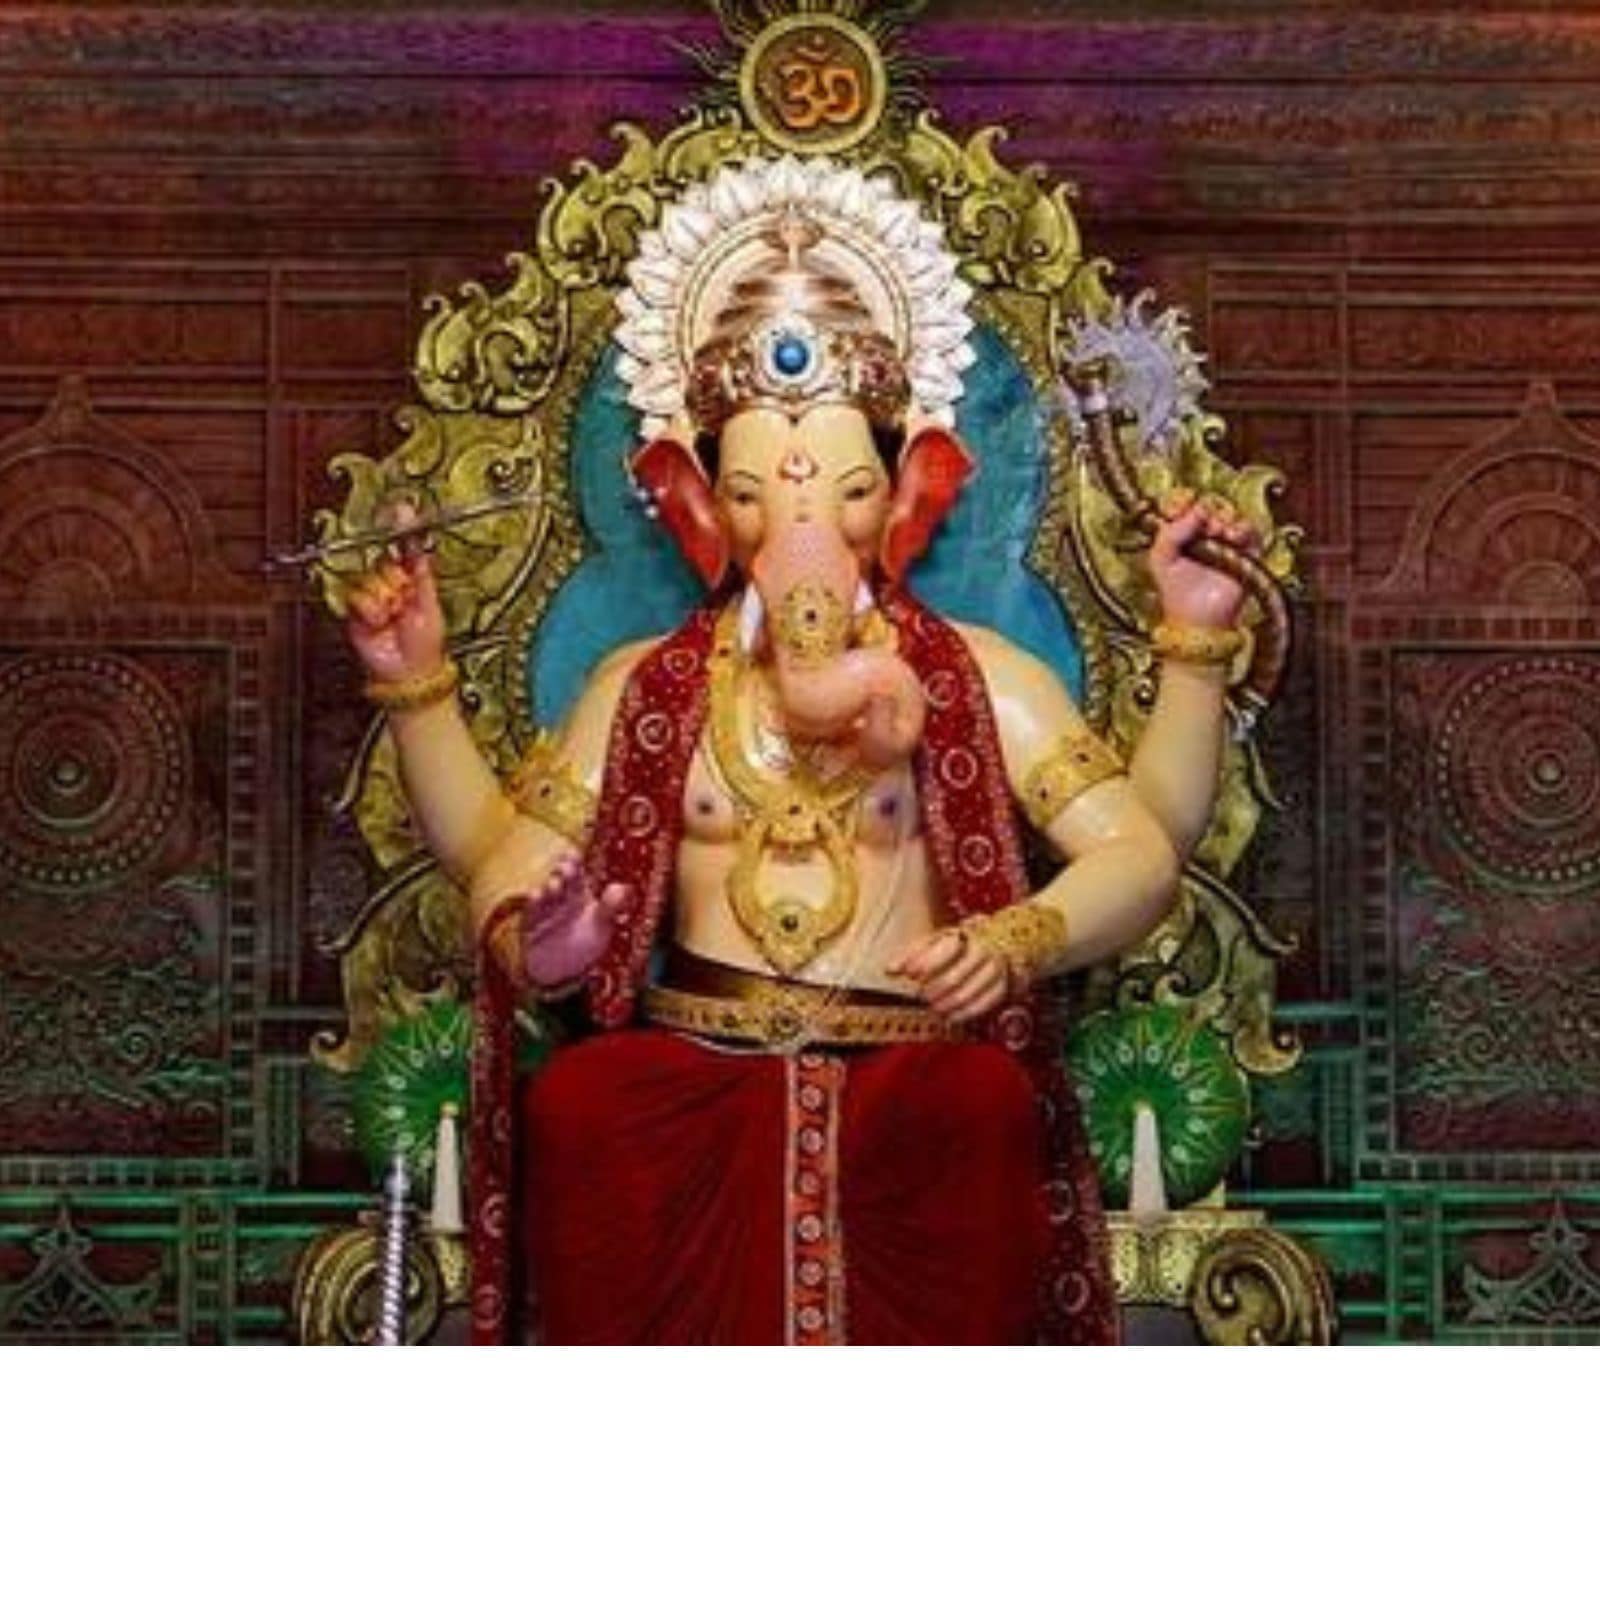 My Lord Ganesha » Lalbaugcha Raja (1934-2014)